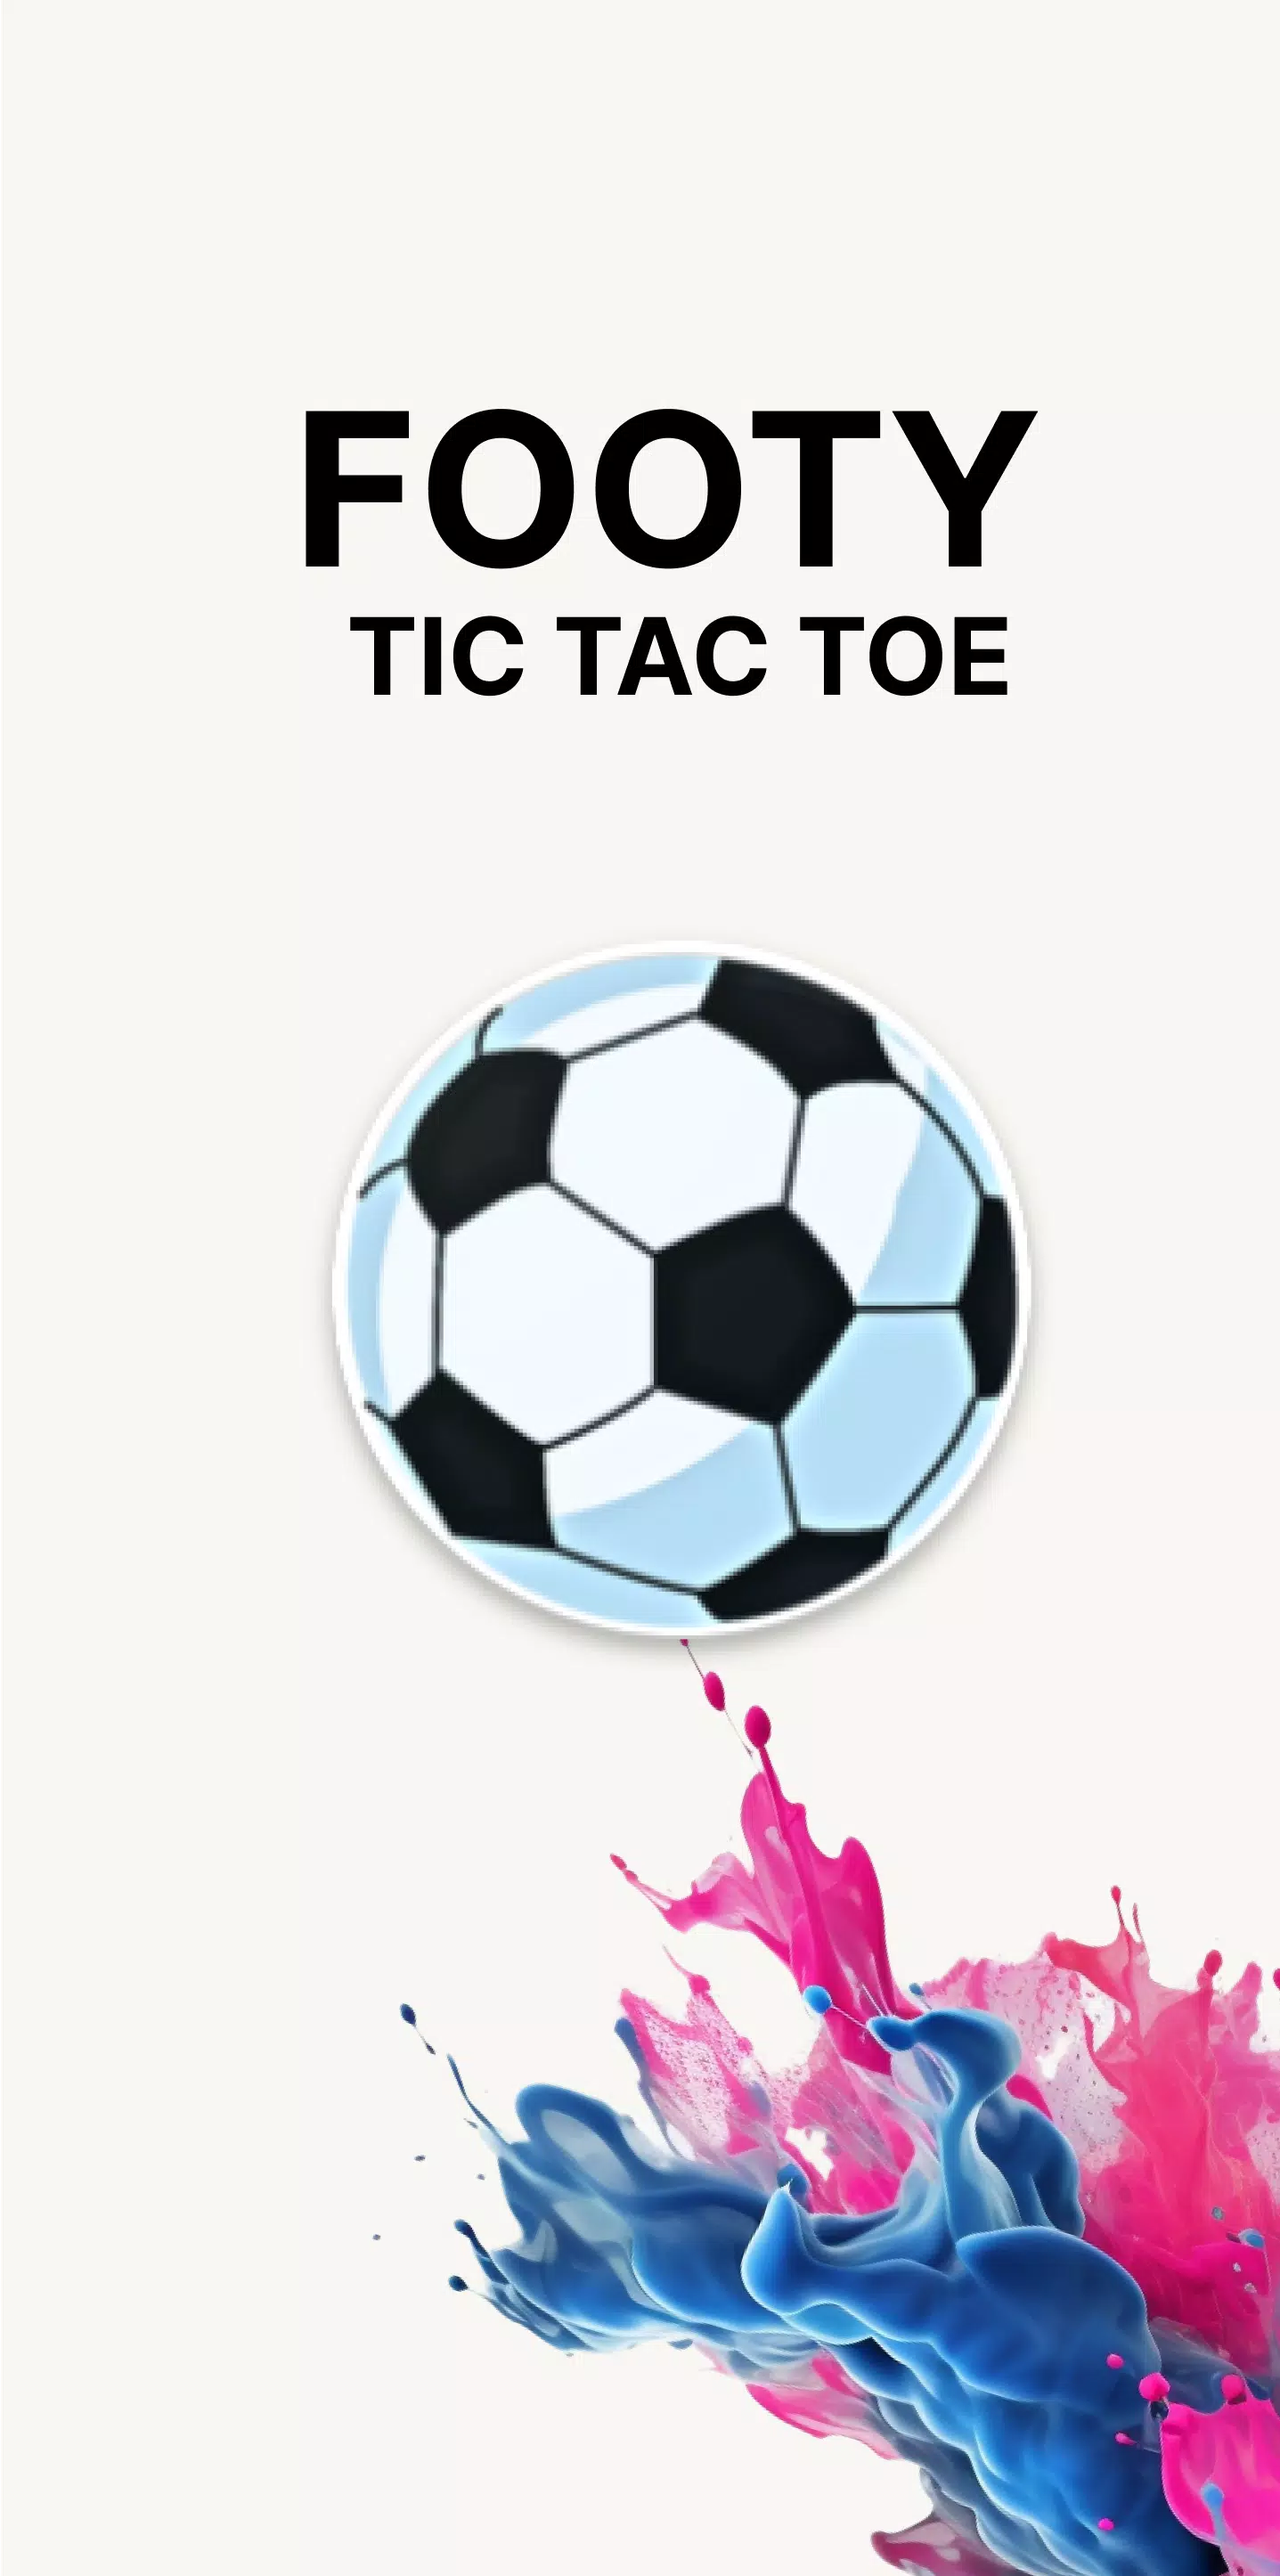 Football tic-tac-toe W/ @دين 🇩🇿 #footballtictactoe #footballtiktok #